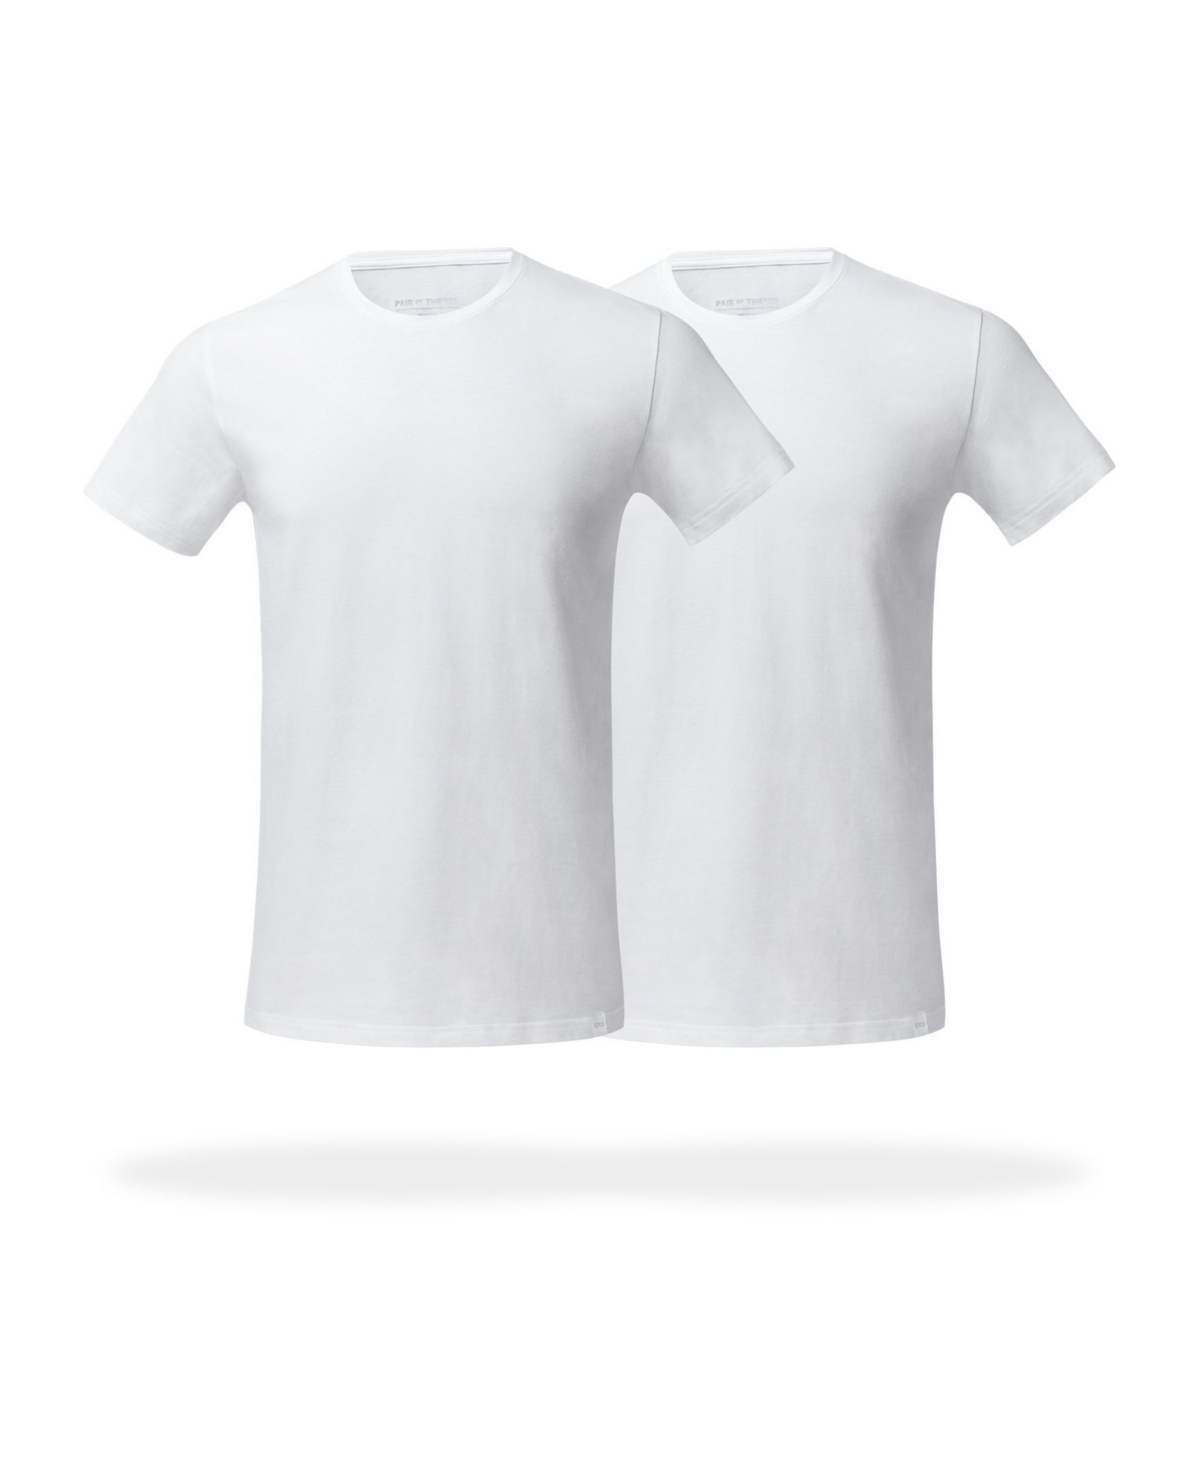 Men's SuperSoft Cotton Stretch Crew Neck Undershirt 2 Pack - White